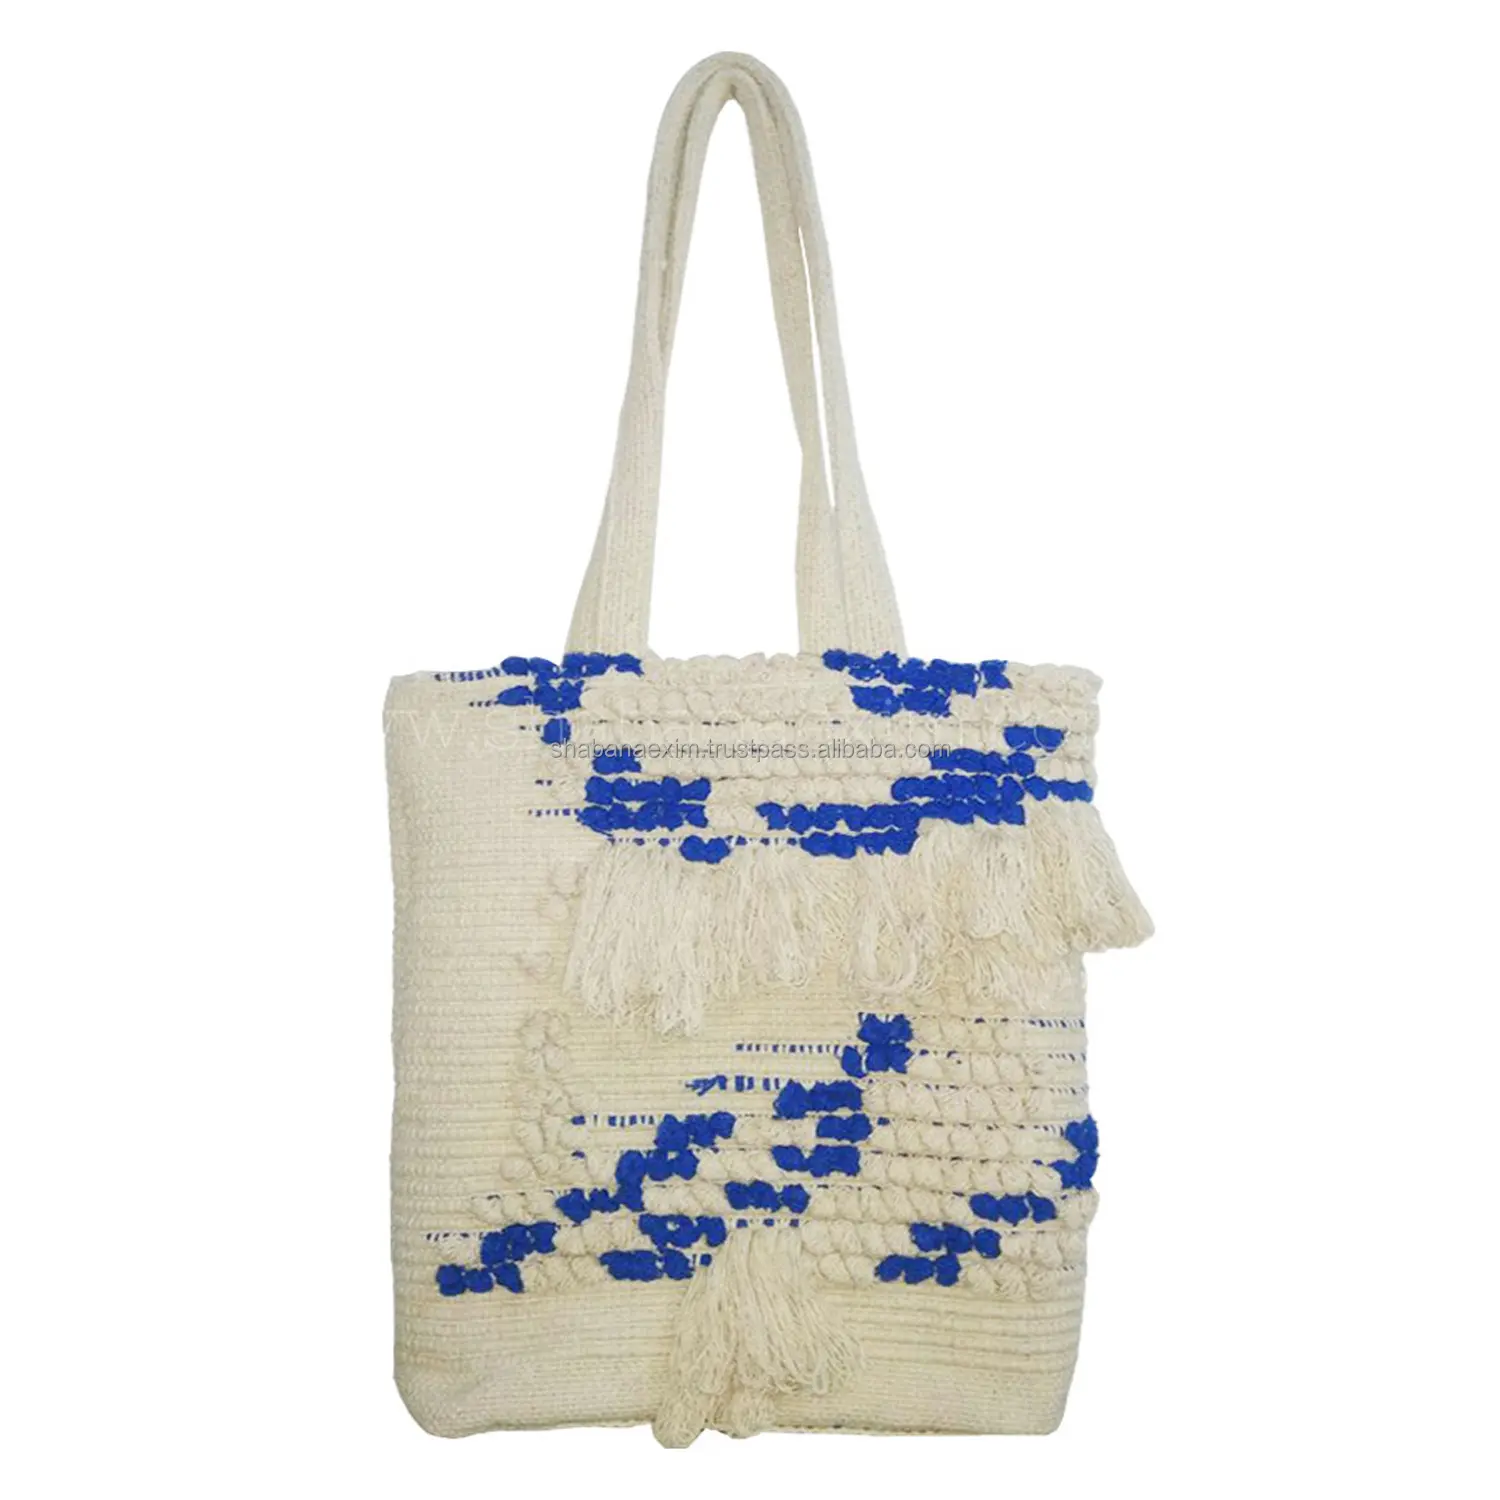 Handloom Bag Boho Cotton Woven Bags Handmade Boho Luxury Bohemian Bags For Women with High Quality from India